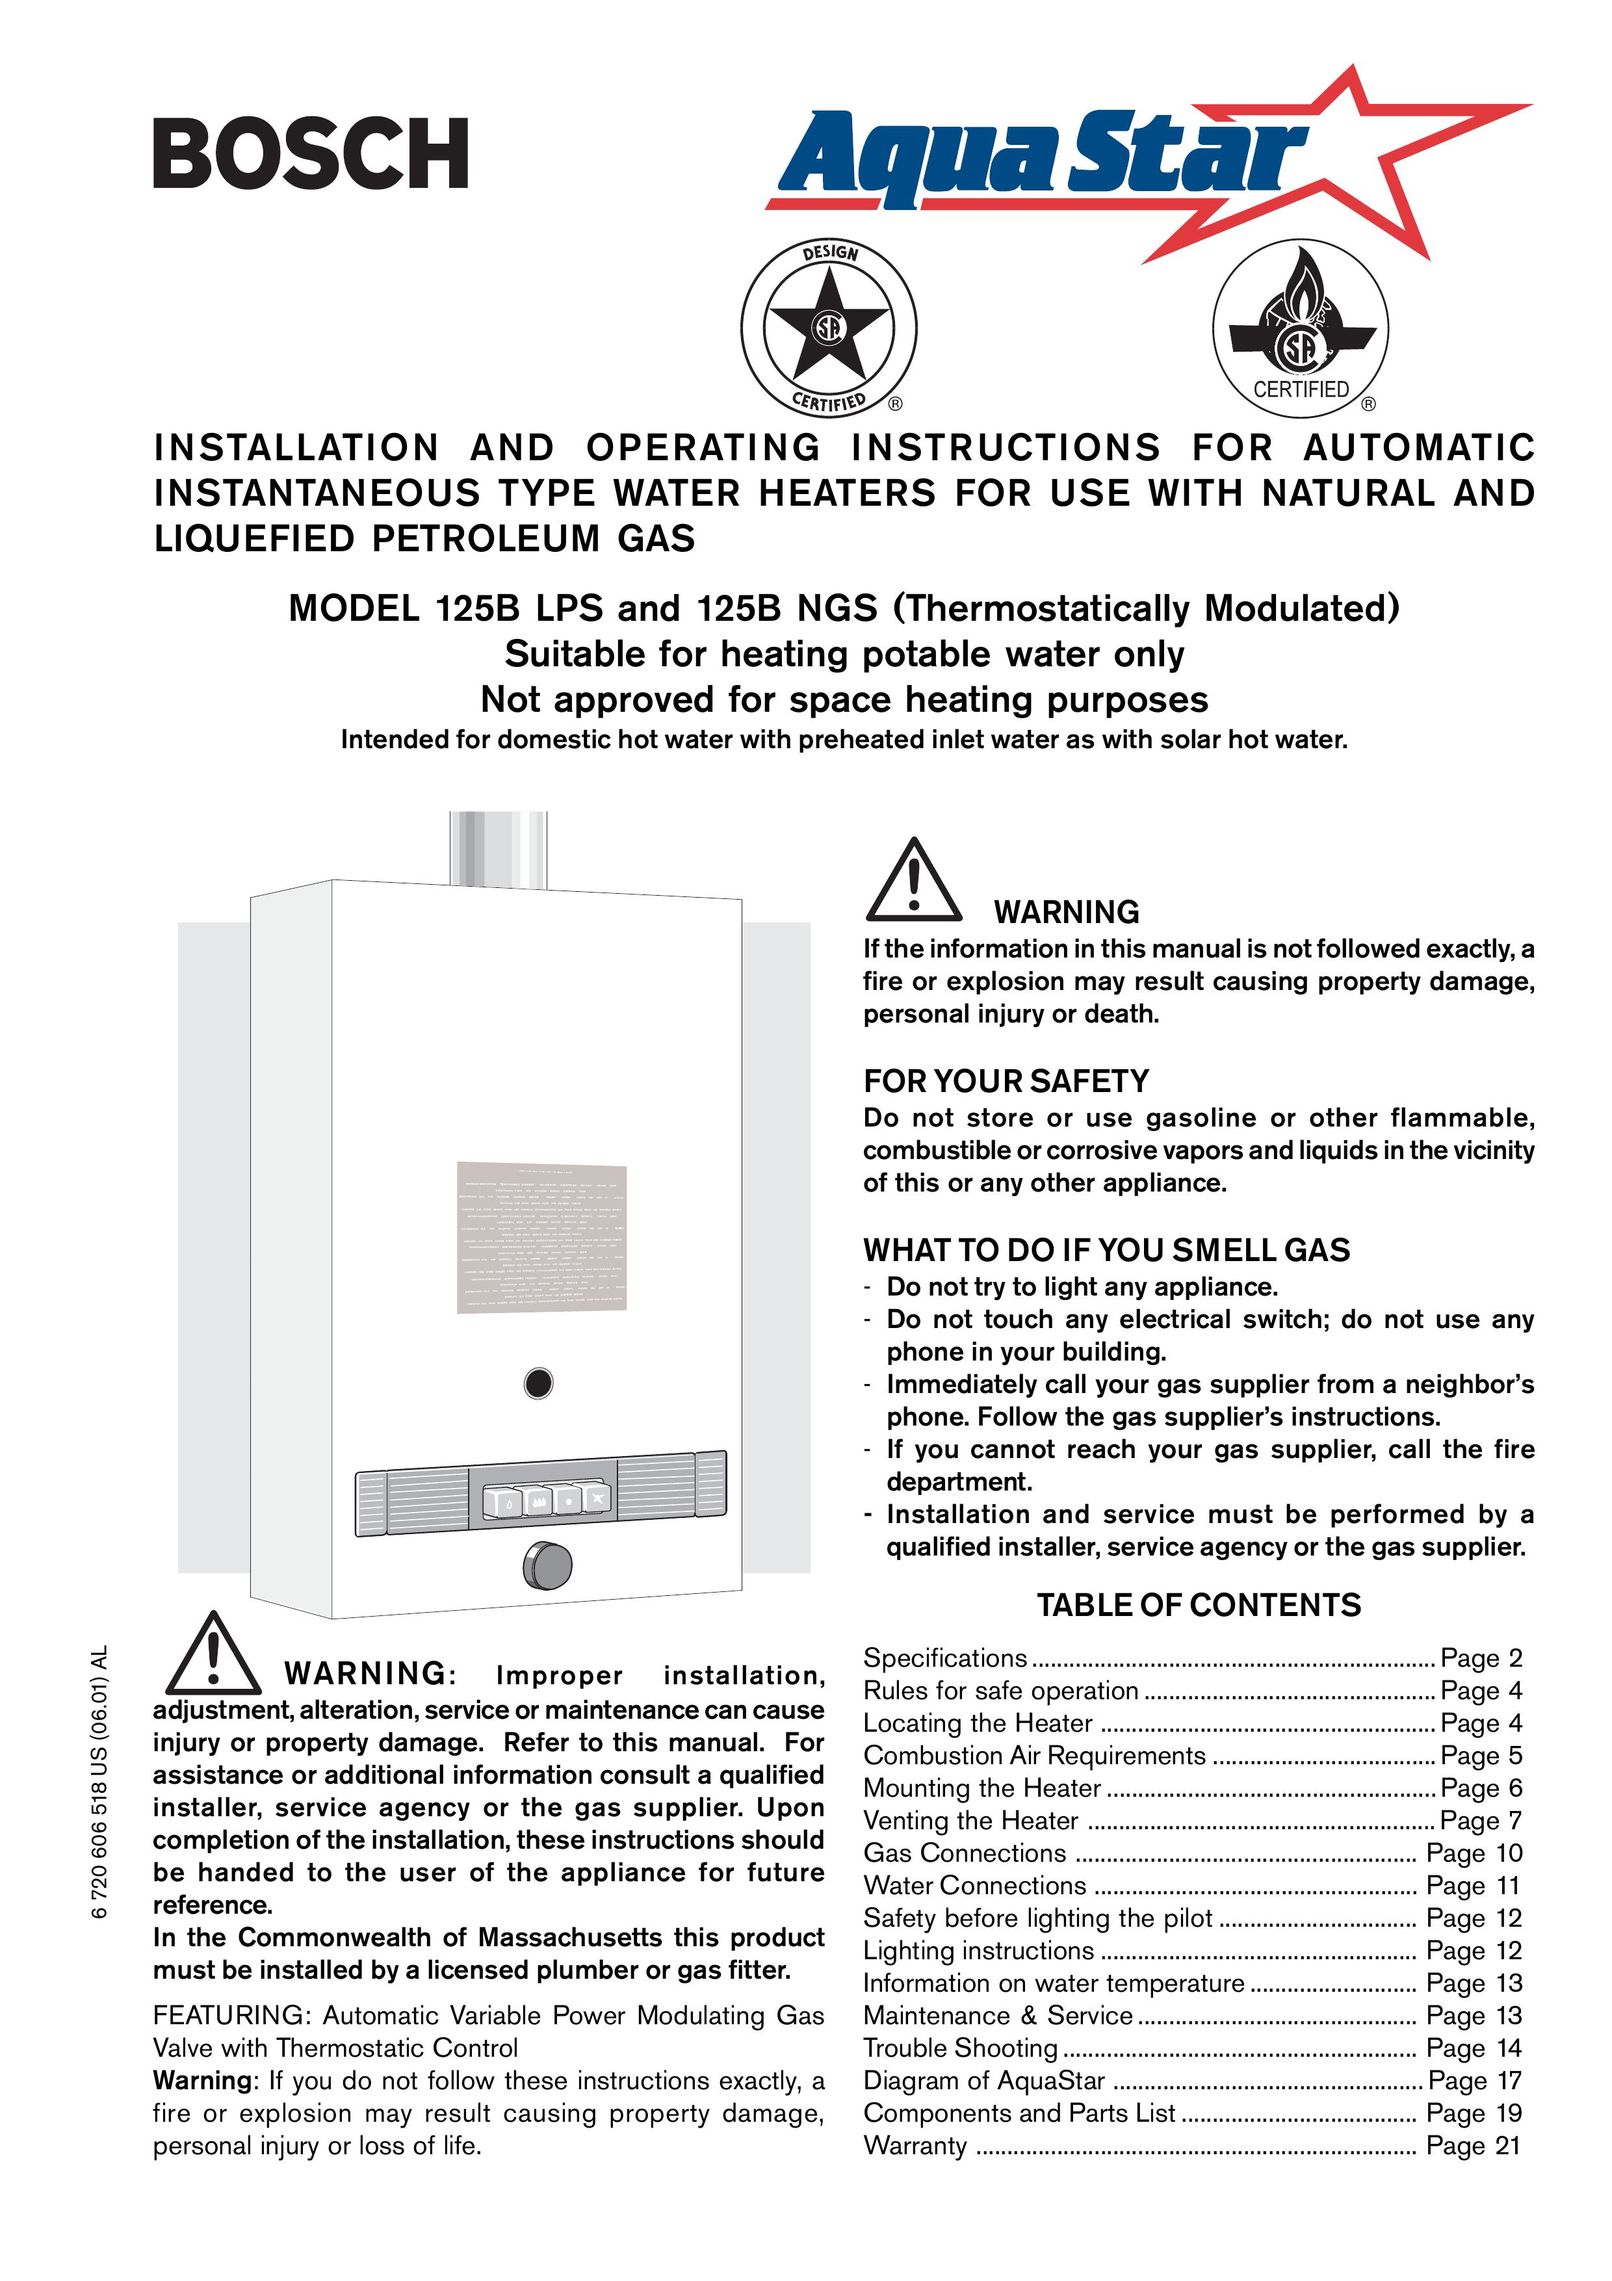 AquaStar 125B NGS Water Heater User Manual